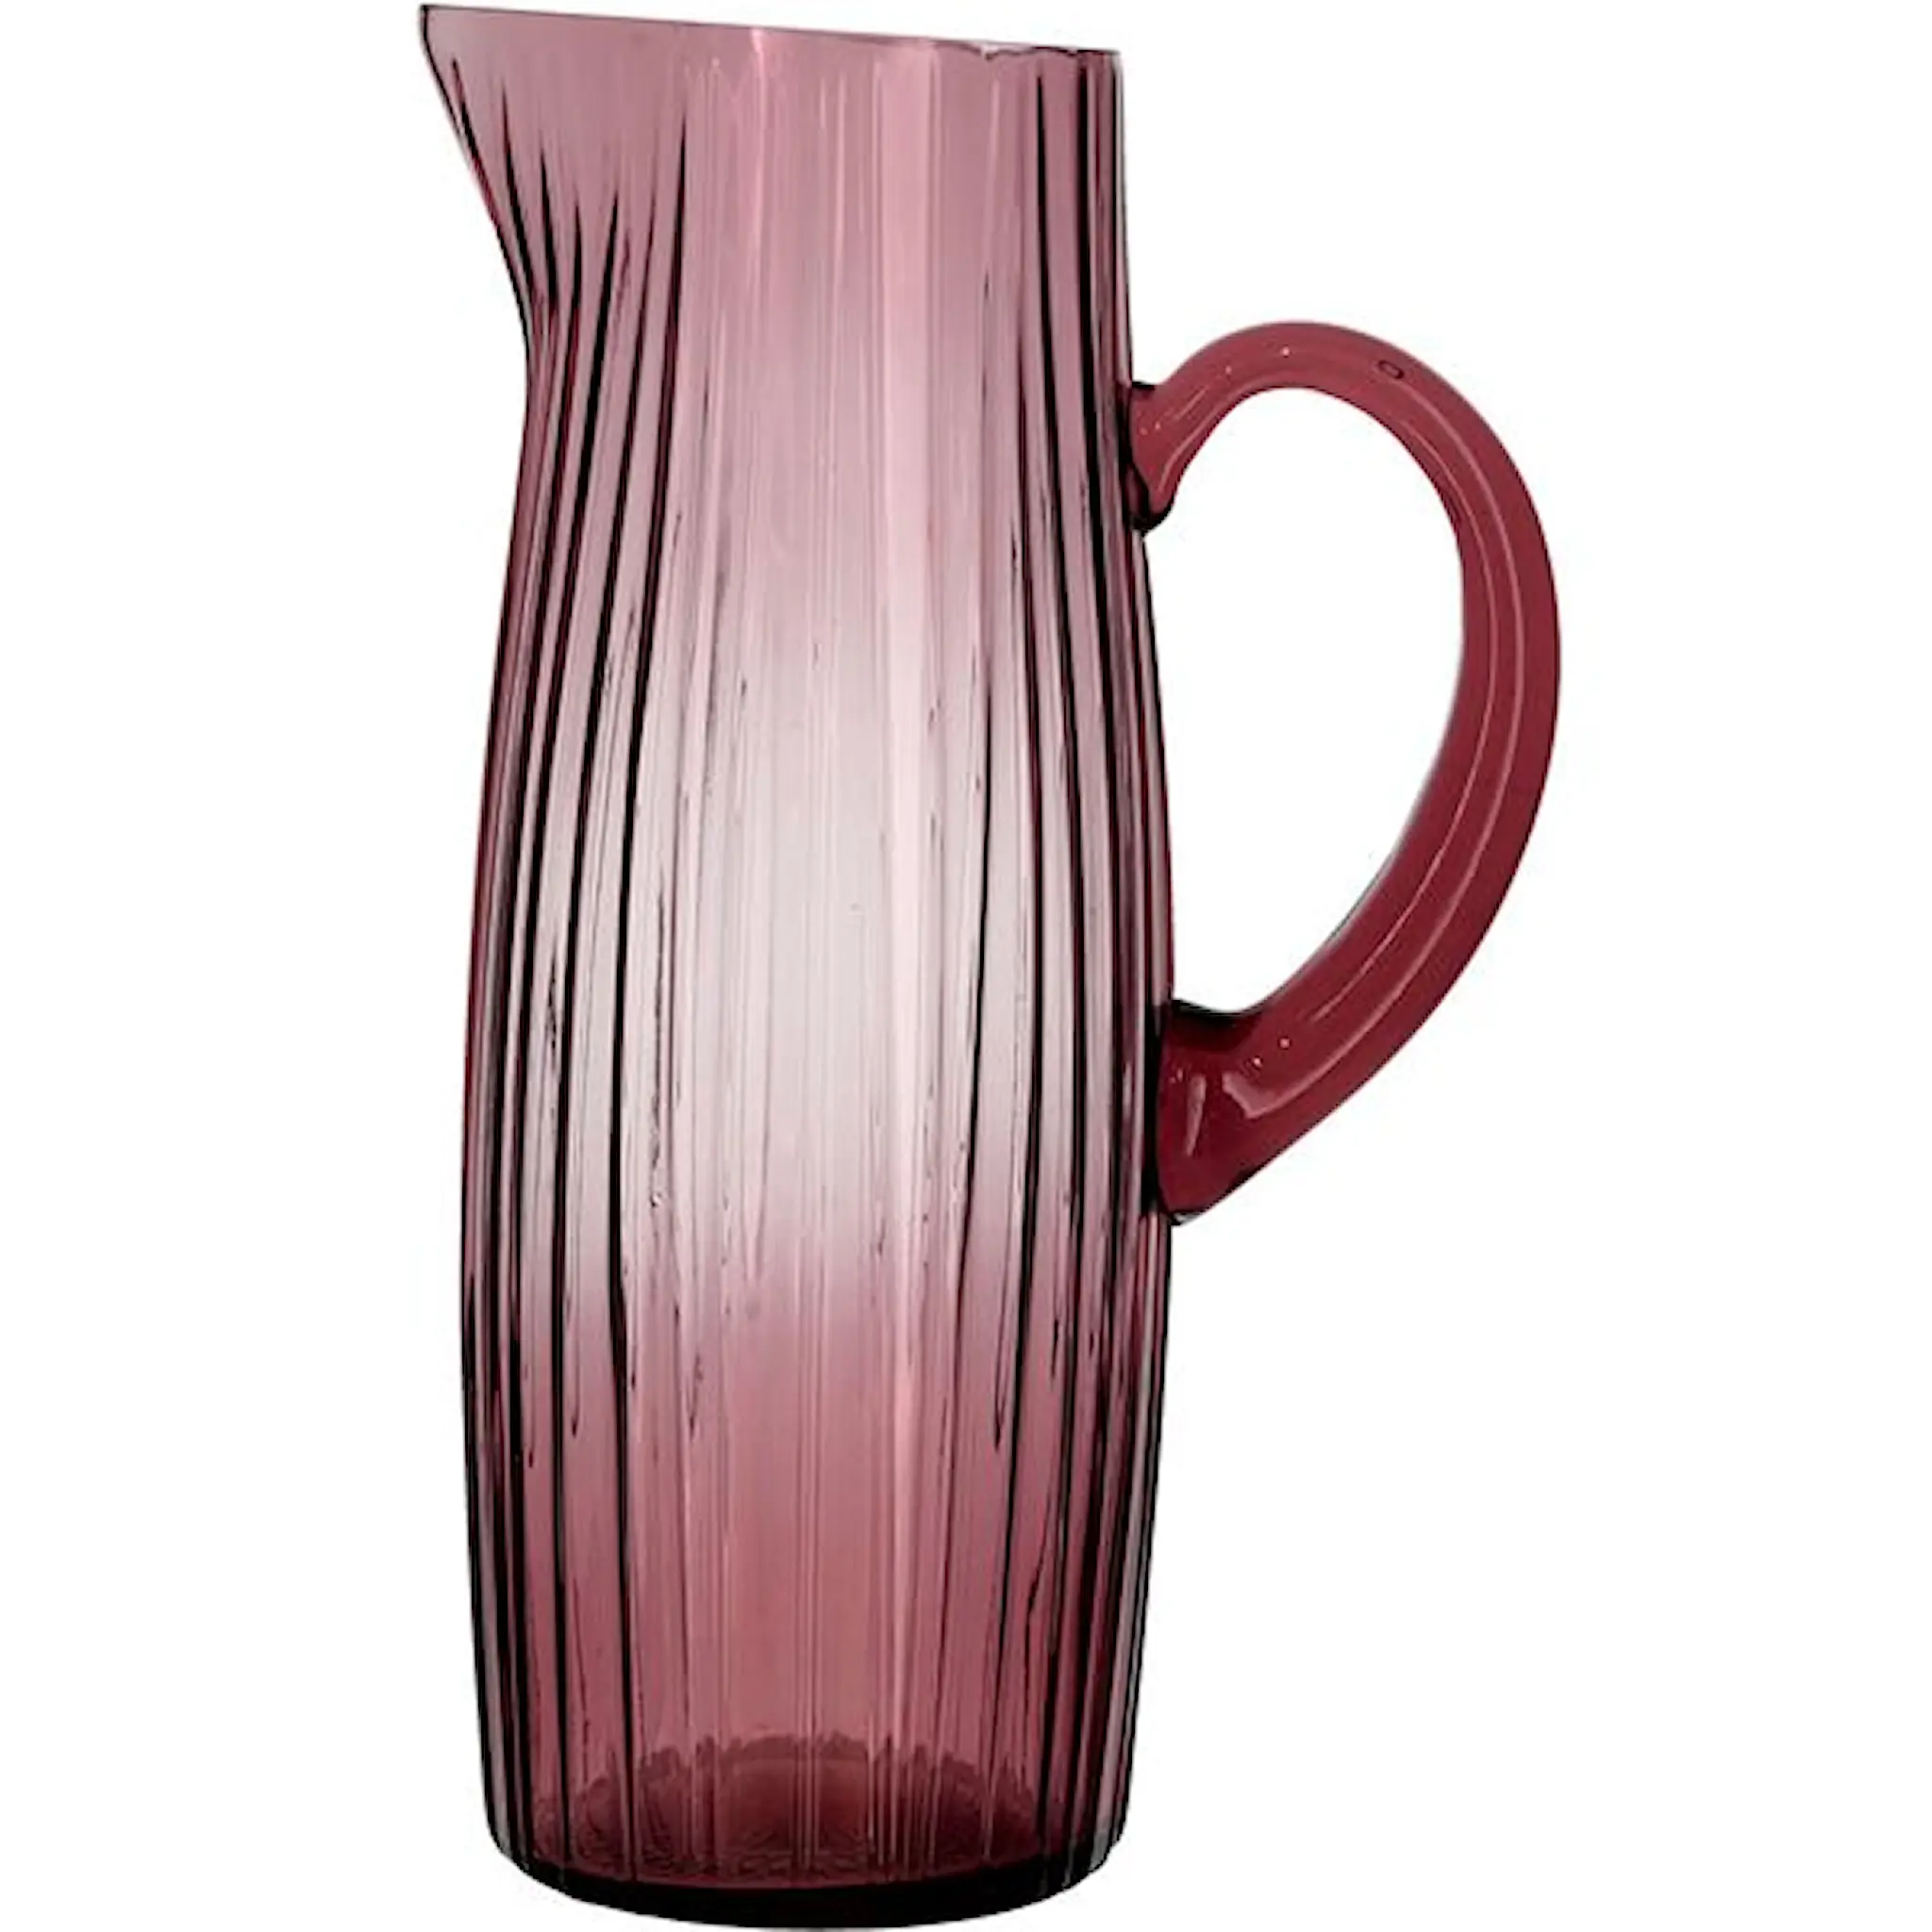 Bitz Kusintha  kanne 1,2L pink glass